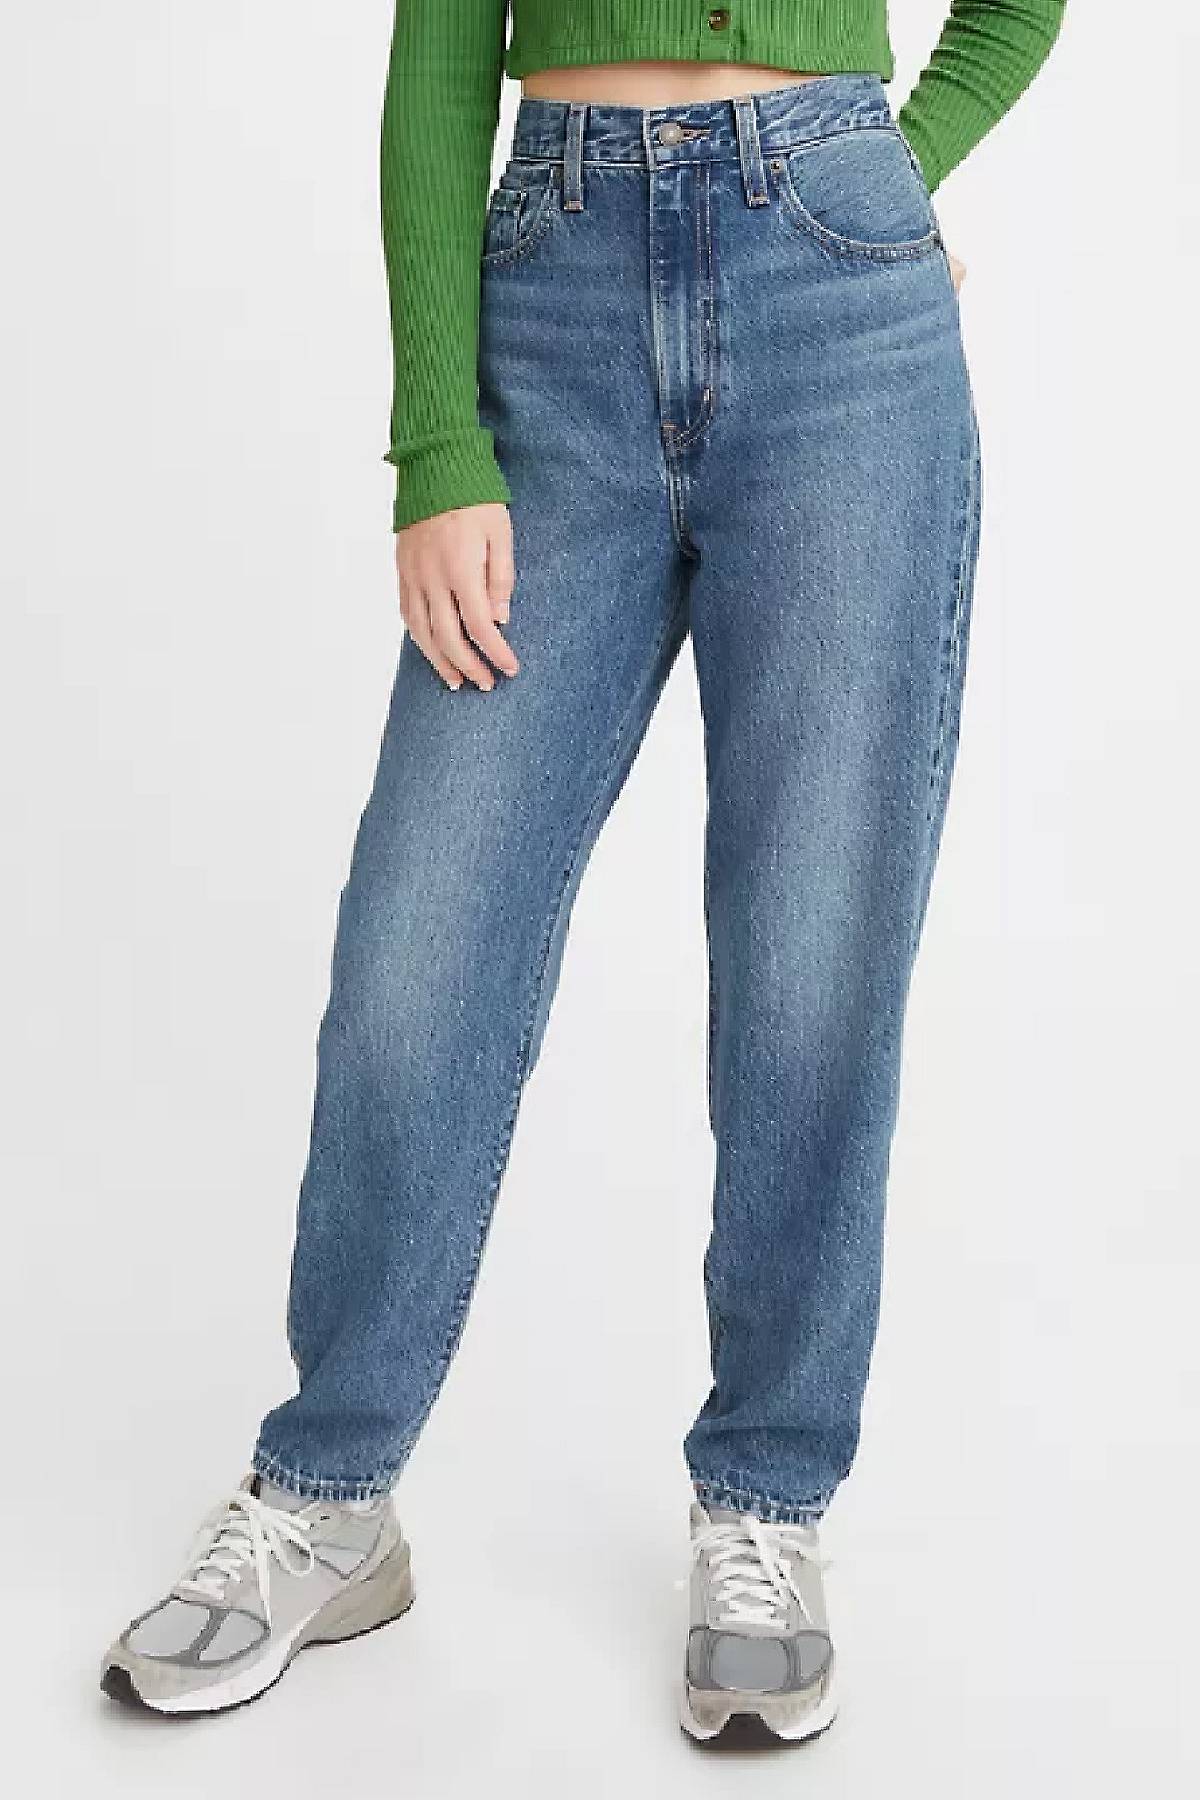 model wearing high loose taper jeans